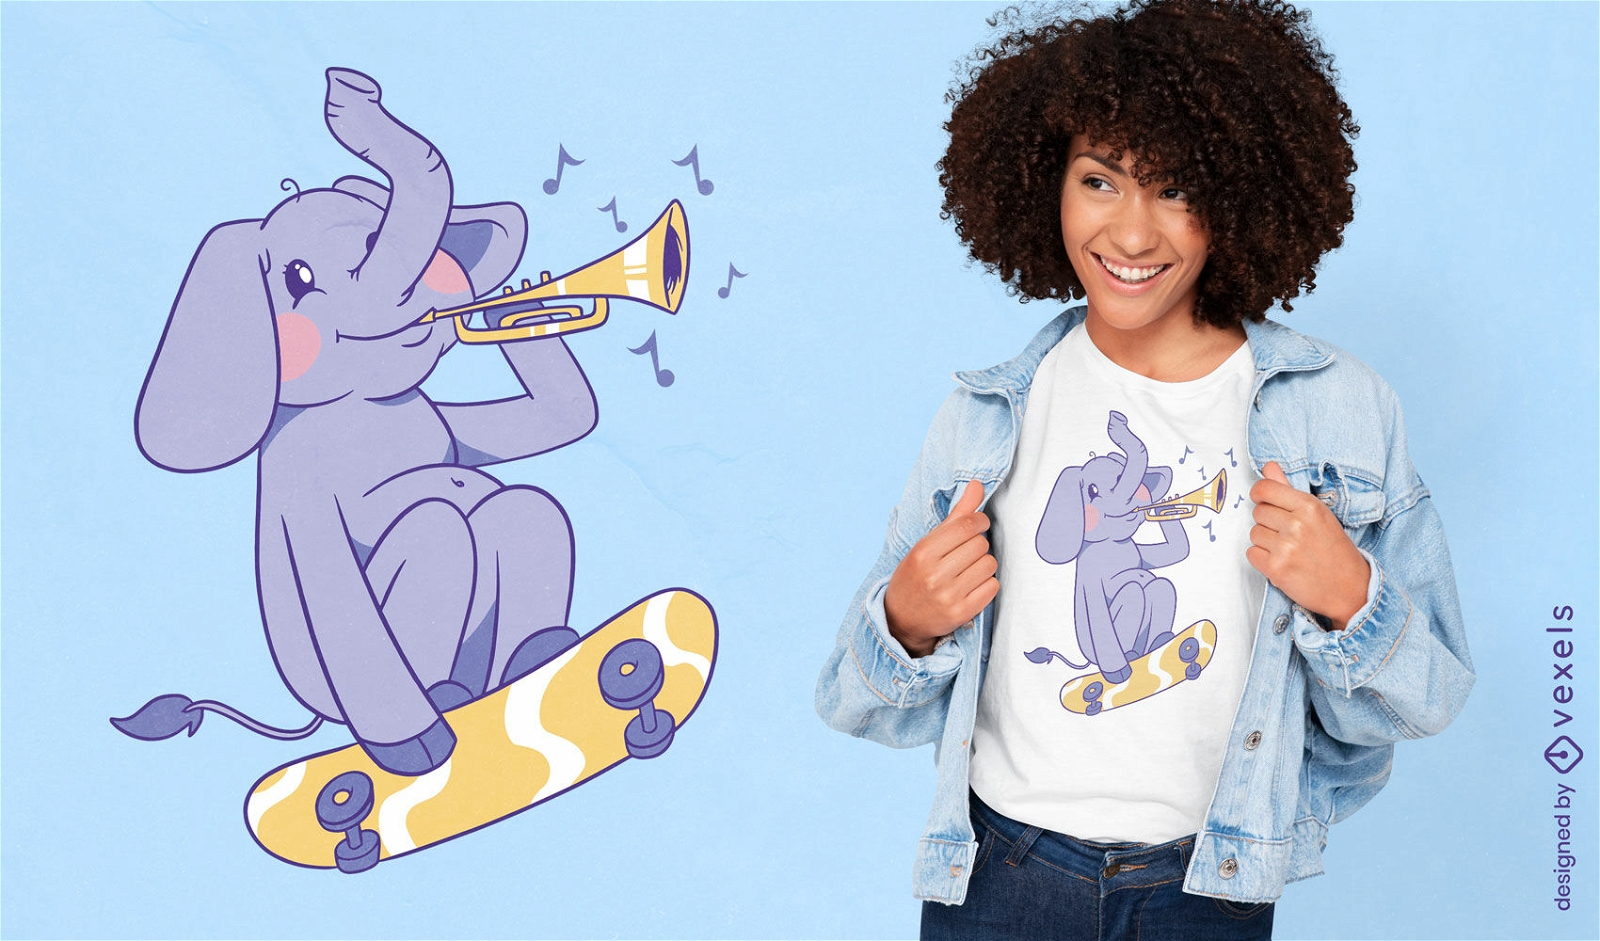 Elefant-Trompeten-Skate-Cartoon-T-Shirt-Design